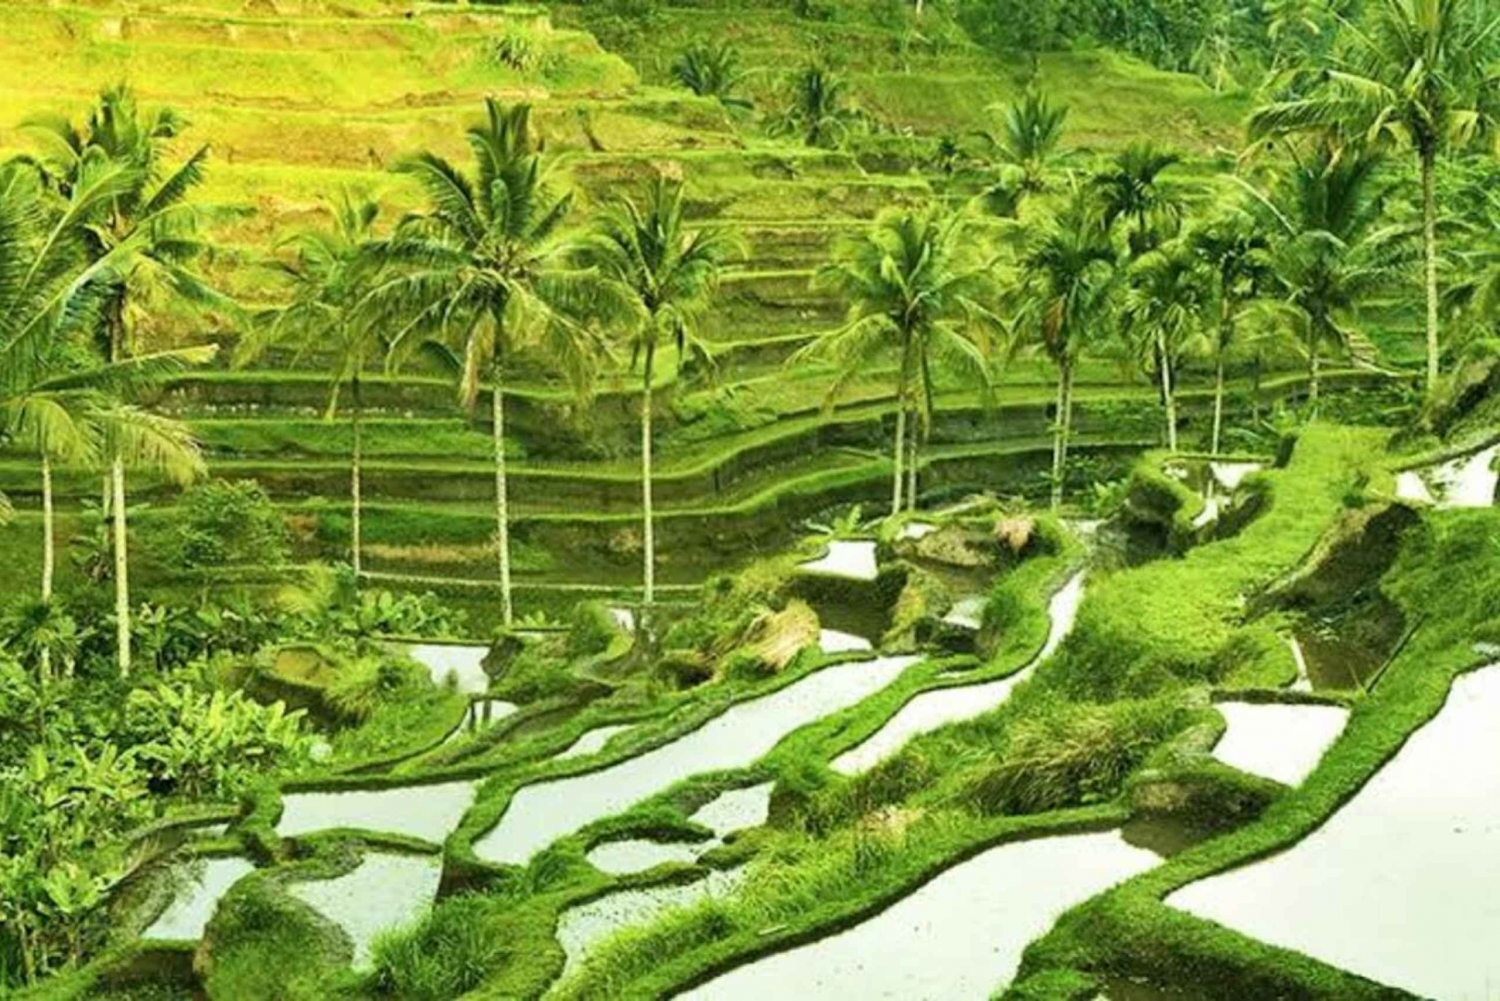 Bali:Ubud Monkey Forest,Rice Terrace,Waterfall & Temple Tour